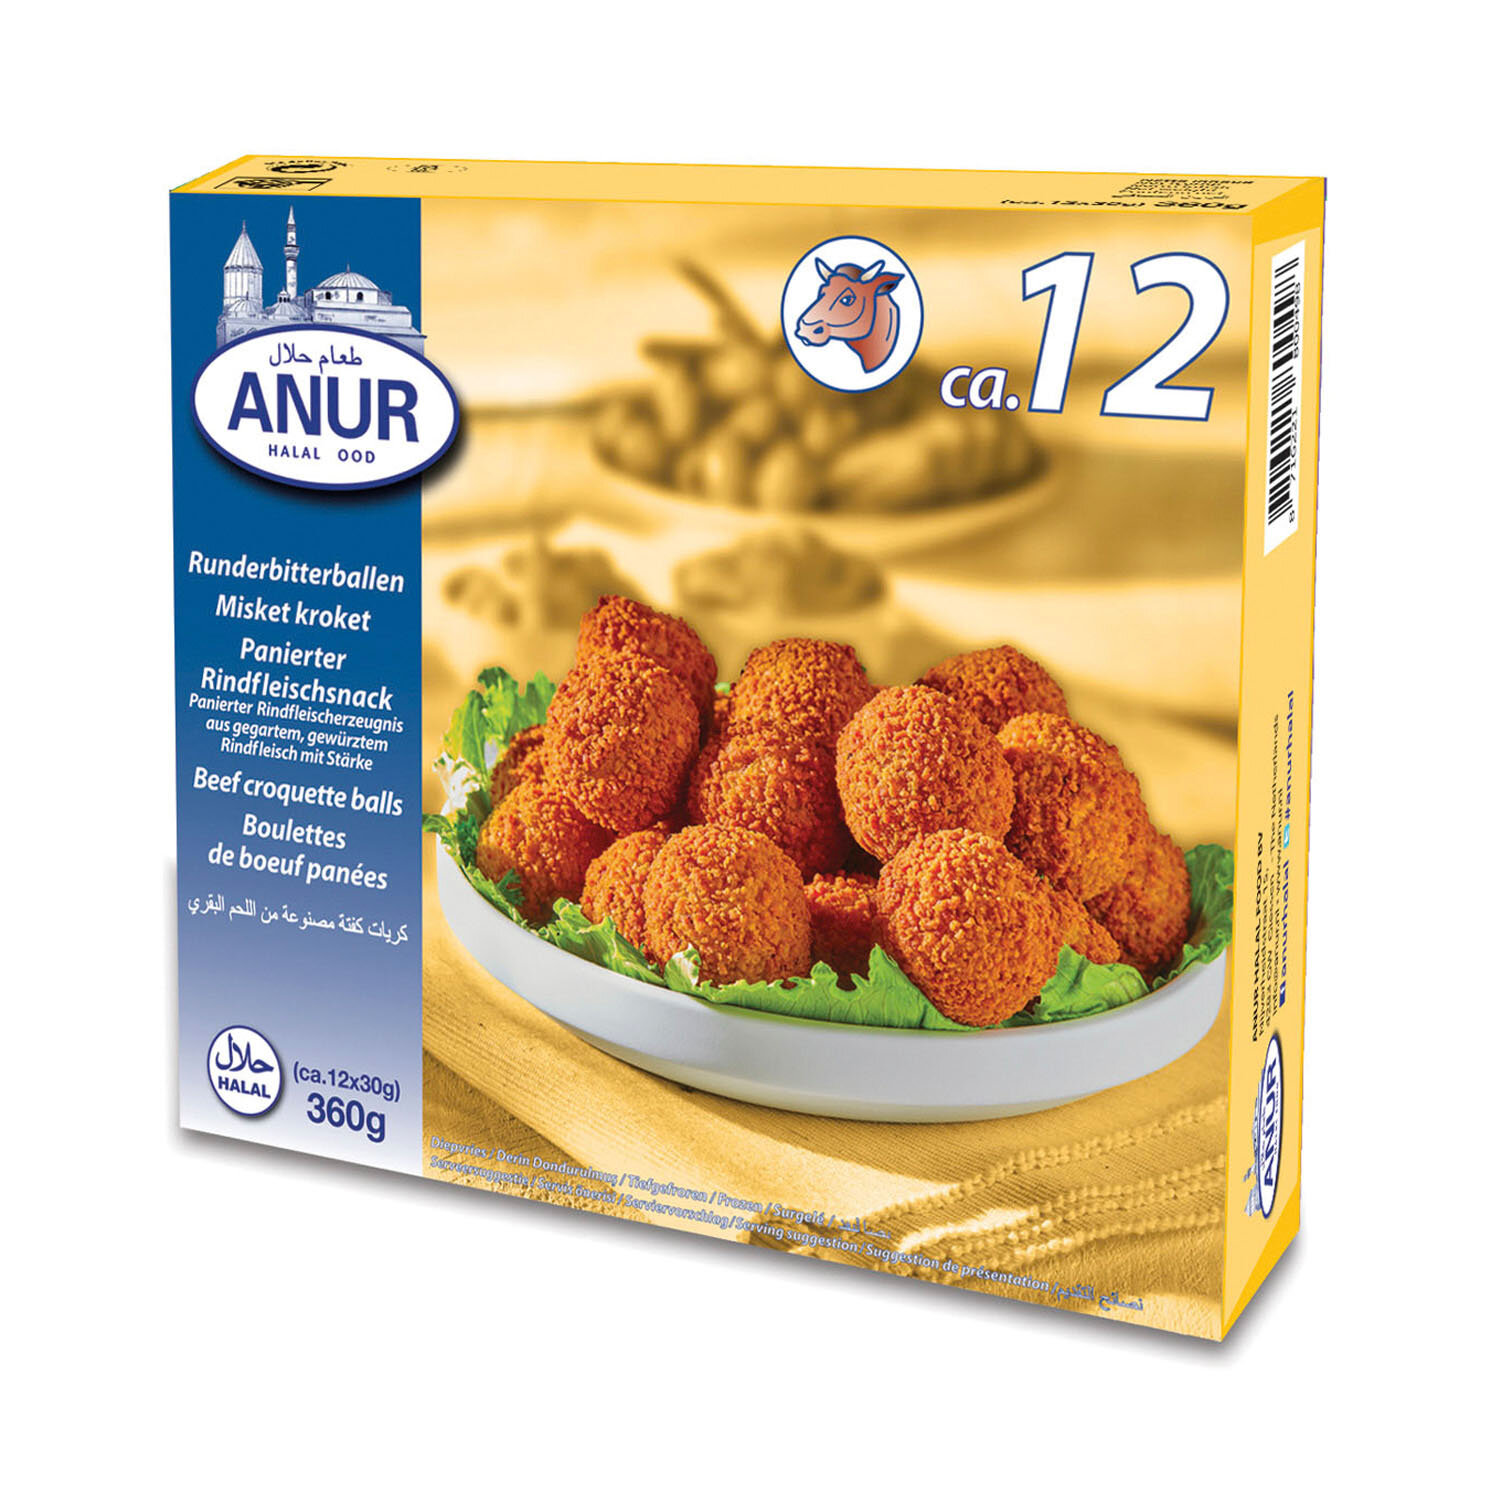 Runderbitterballen - ANUR Halal Food  (Copy)